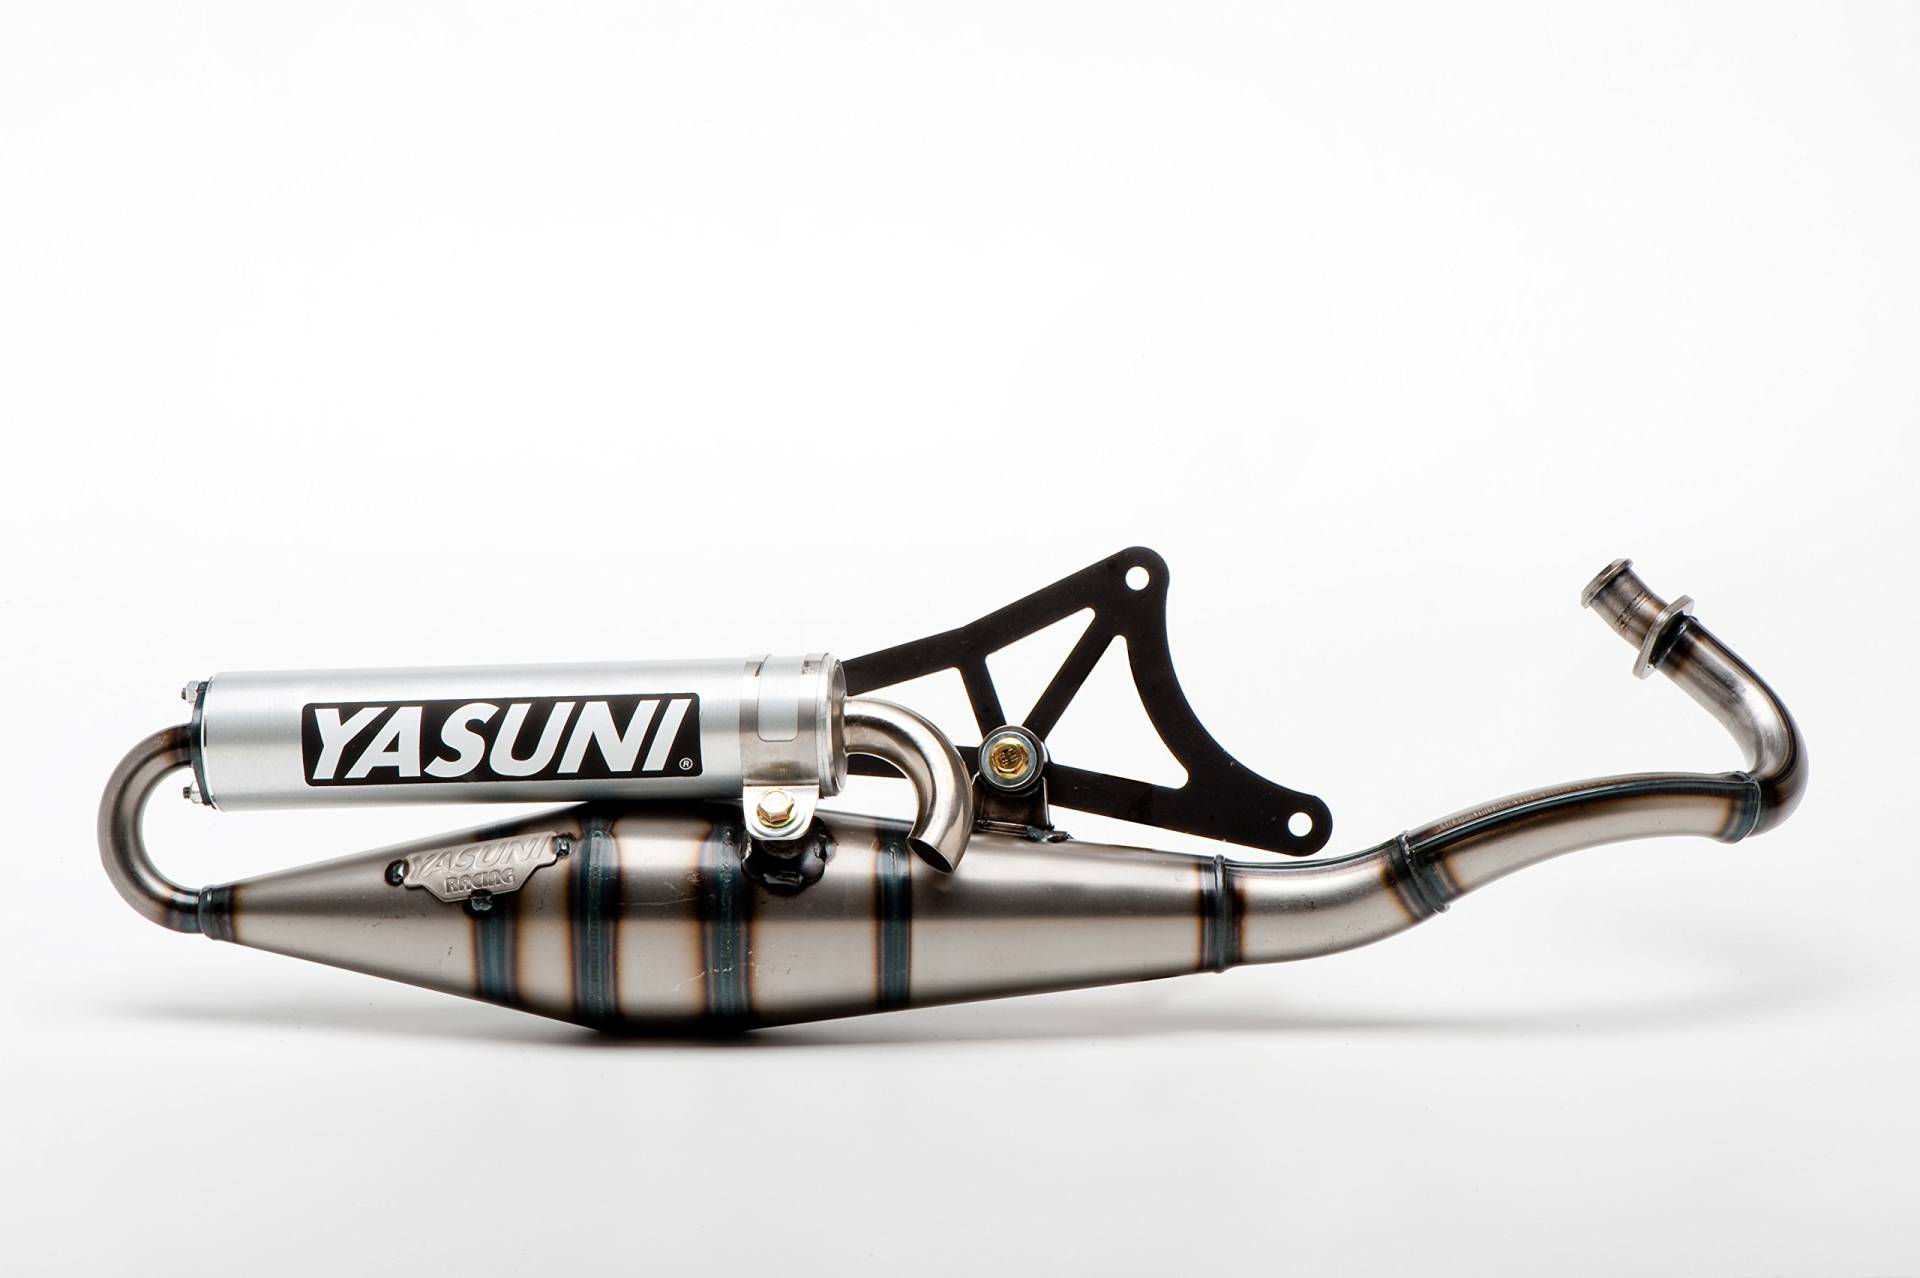 Auspuff Yasuni Scooter Z Aluminium für Piaggio von YASUNI